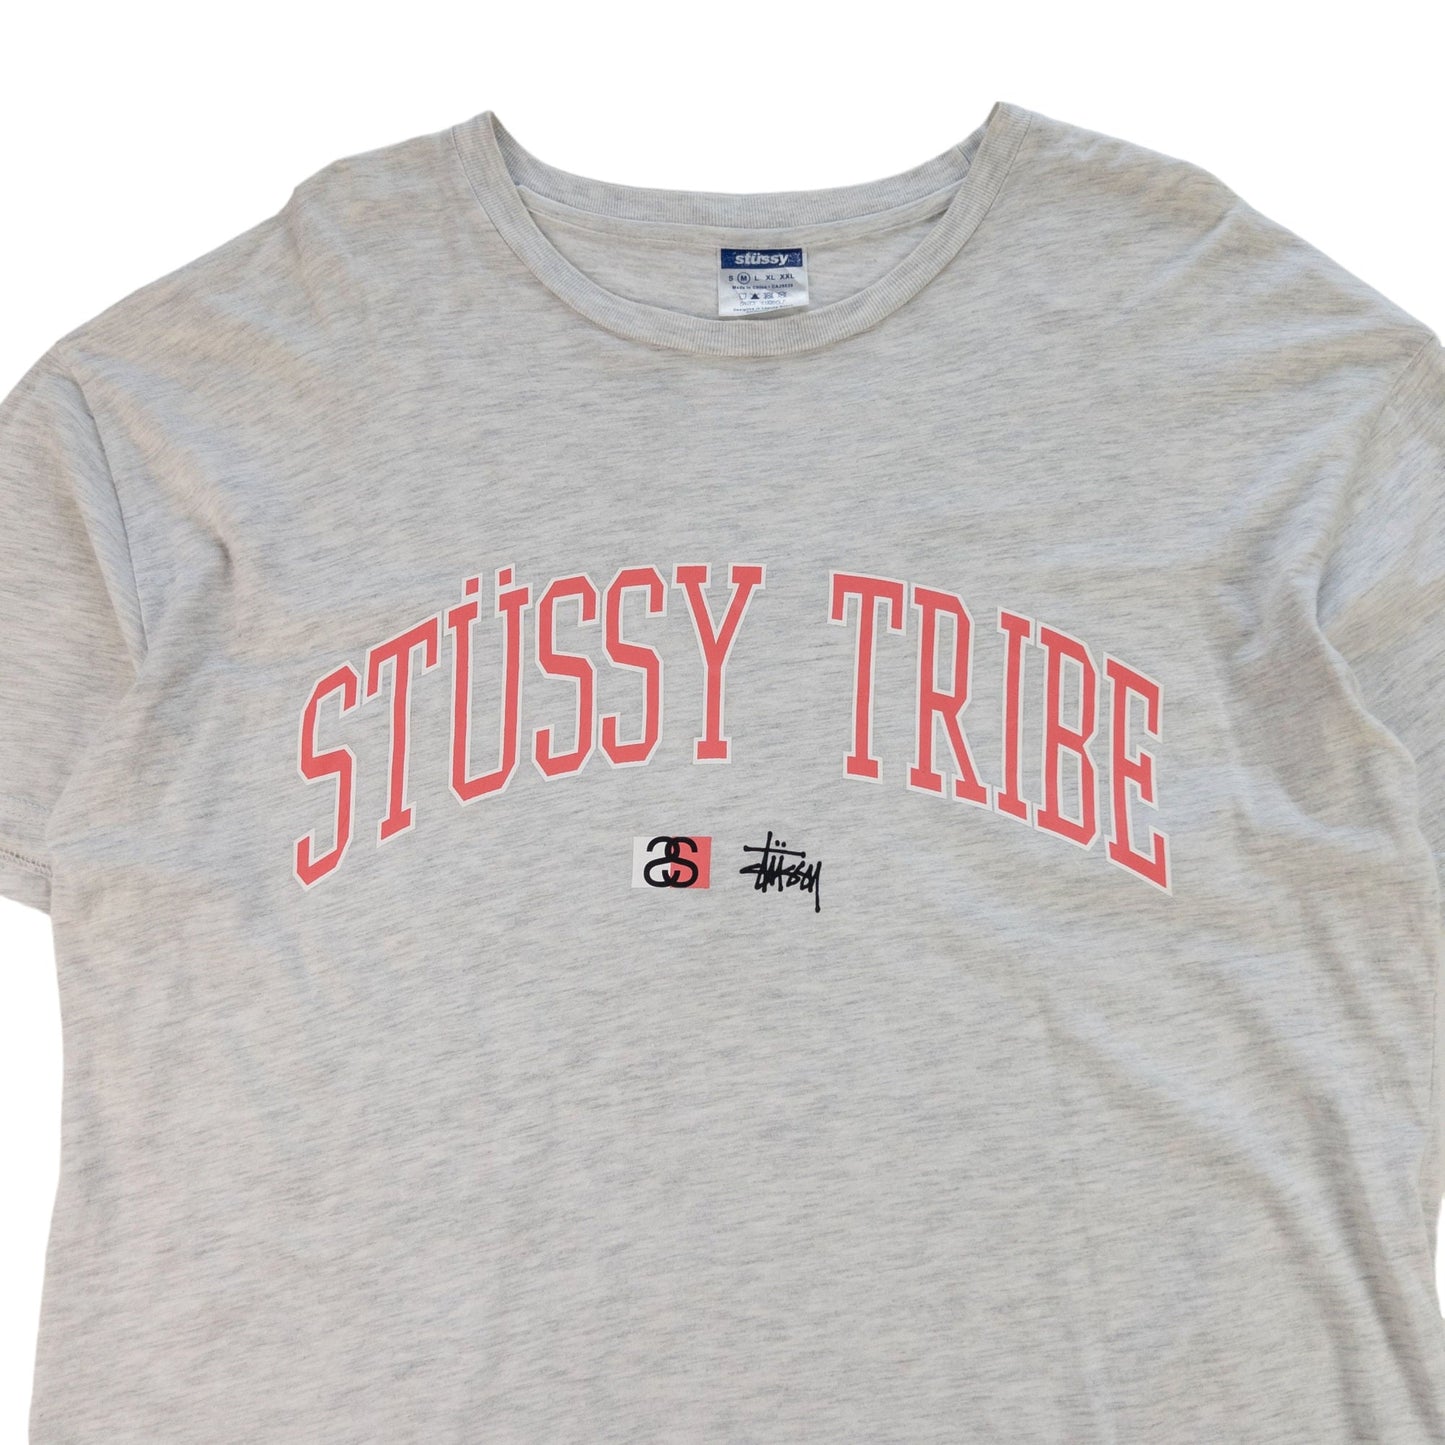 Stussy Tribe T Shirt Size M